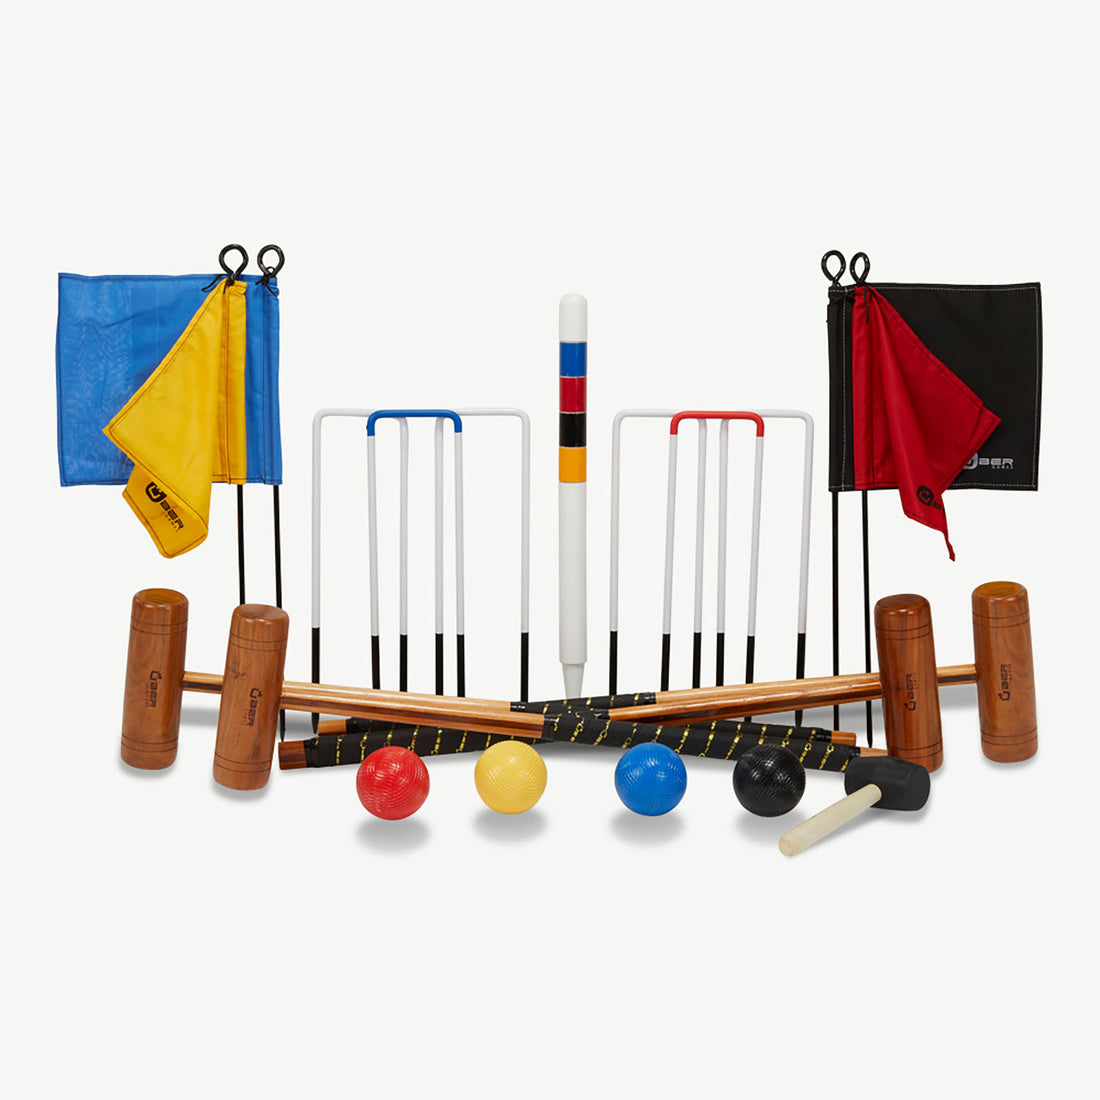 Garten Croquet Set - 4 Spieler - Hartholz- Krocket-Spiel - Crockett Made in Indien ECO holz